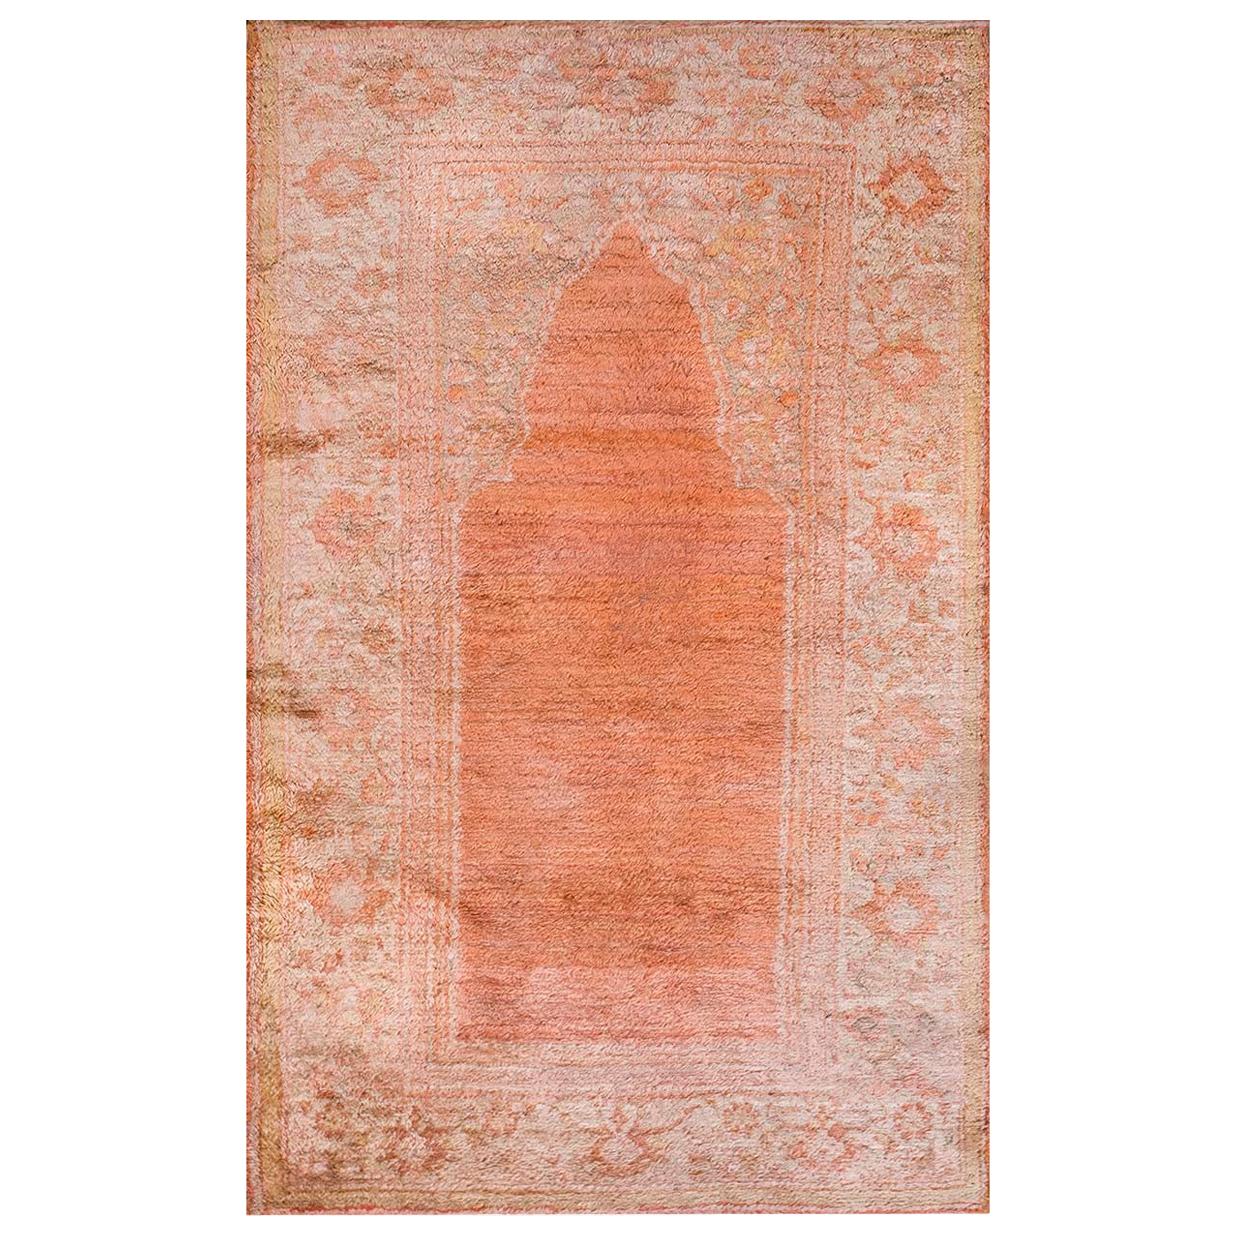 19th Century Turkish Angora Oushak Prayer Rug ( 3'10" x 5'10" - 117 x 178 )